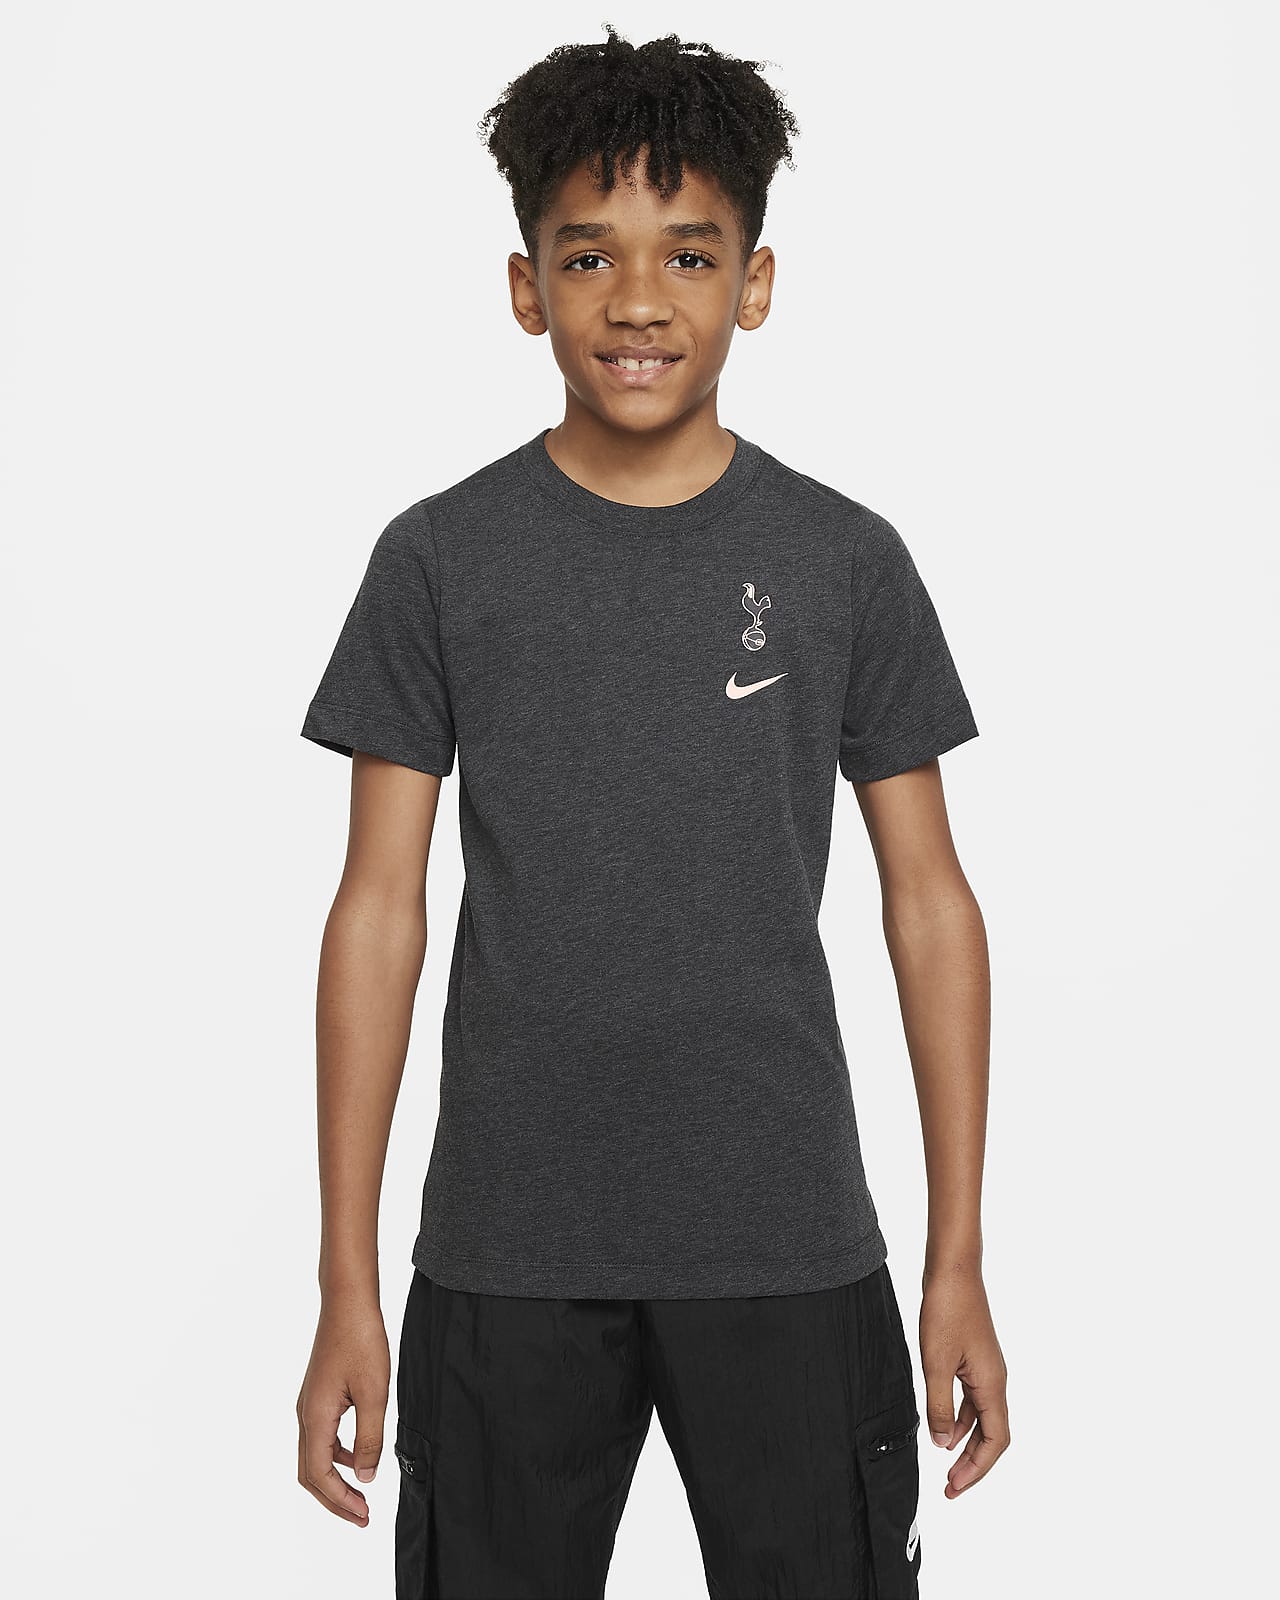 Tottenham Hotspur Fußball-T-Shirt für ältere Kinder